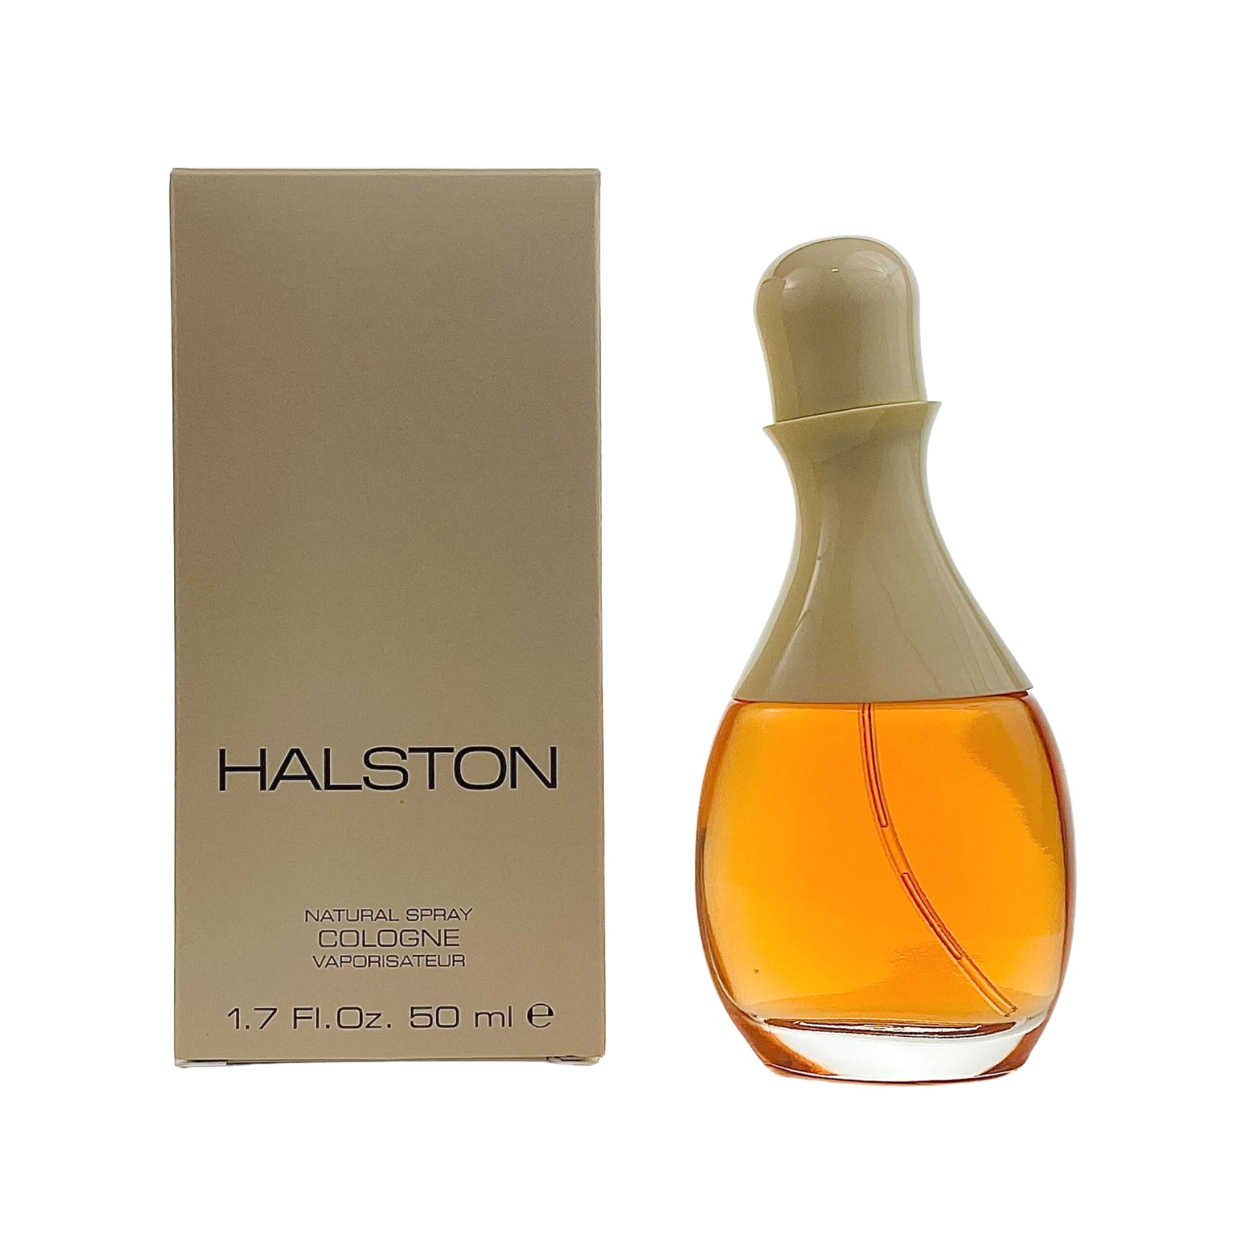 Halston Cologne For Women 1.7 Oz / 50 Ml - Spray